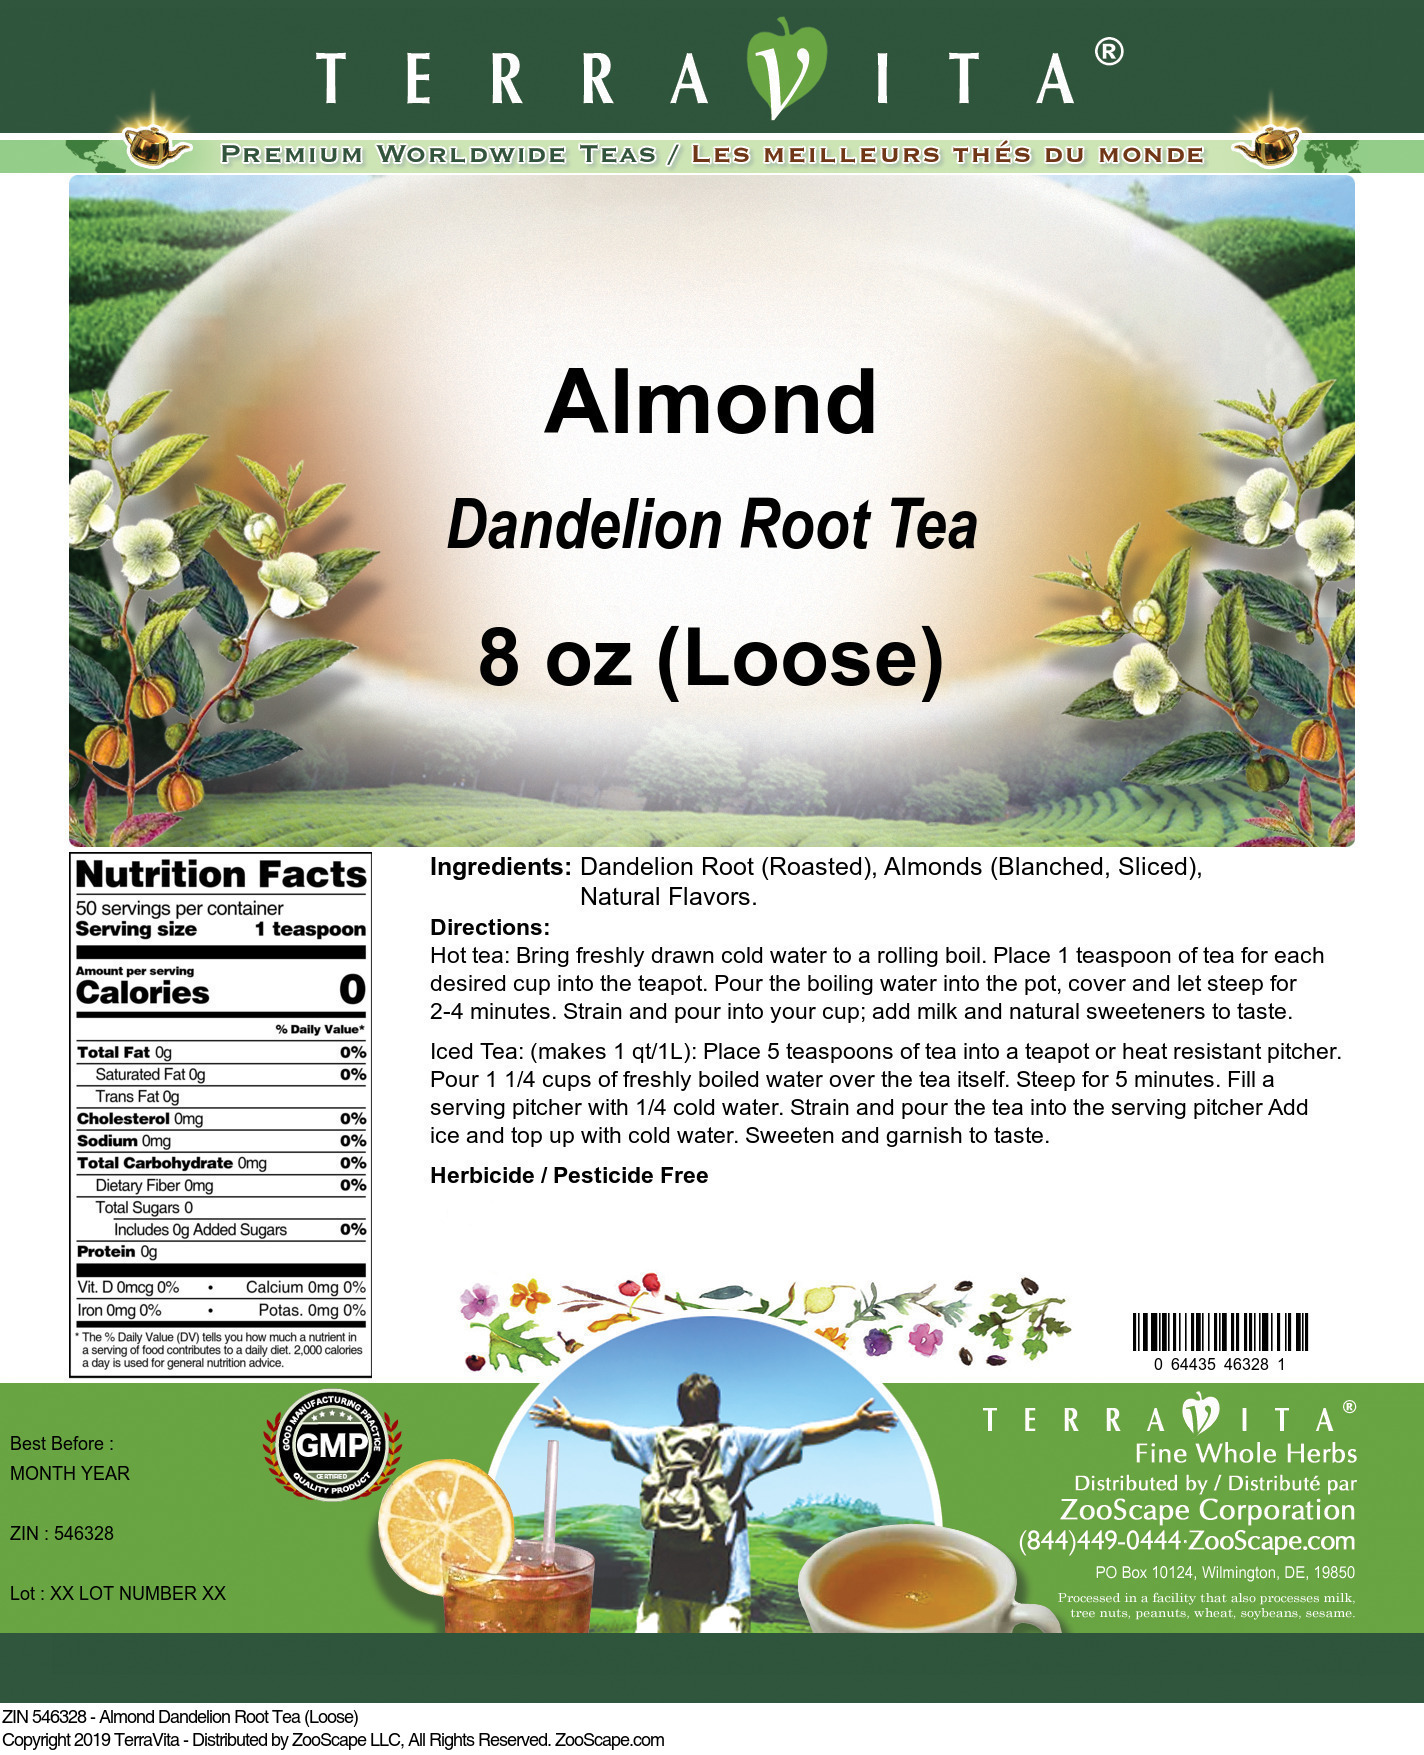 Almond Dandelion Root Tea (Loose) - Label